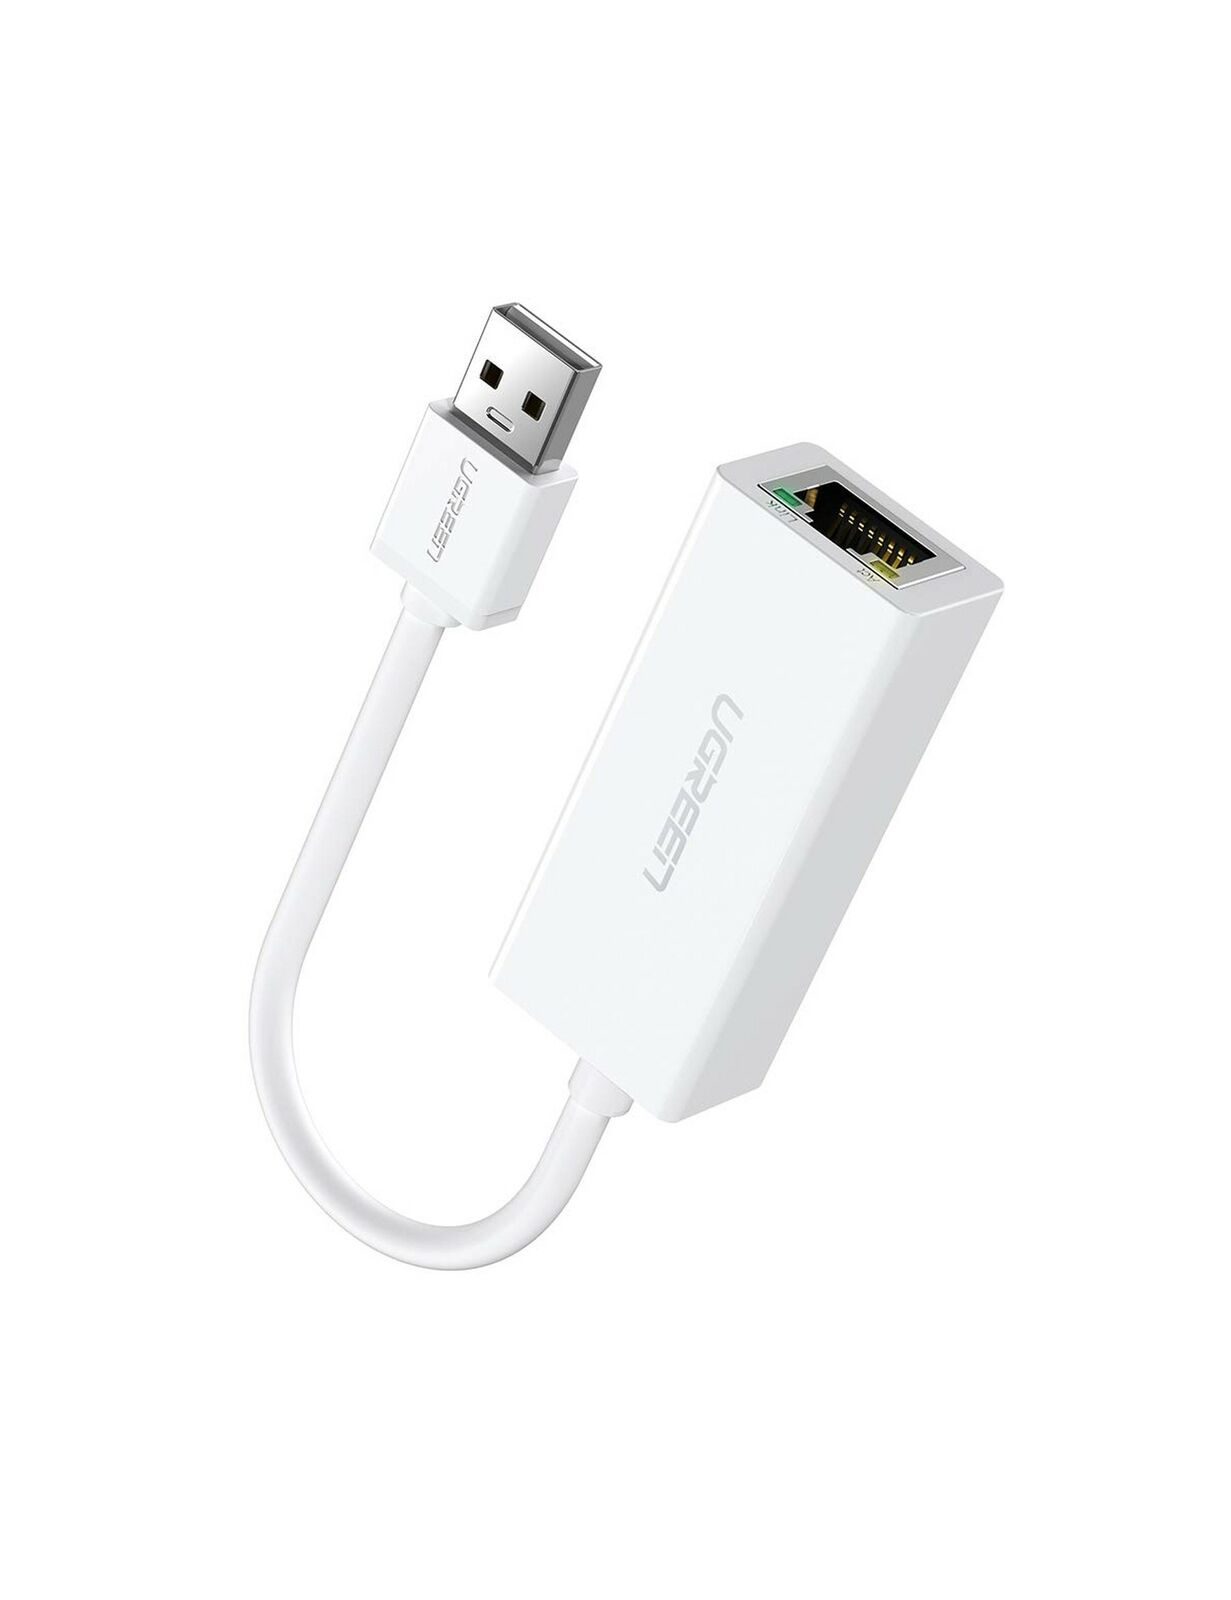 UGREEN Ethernet Adapter (White) USB 2.0 100Mbps